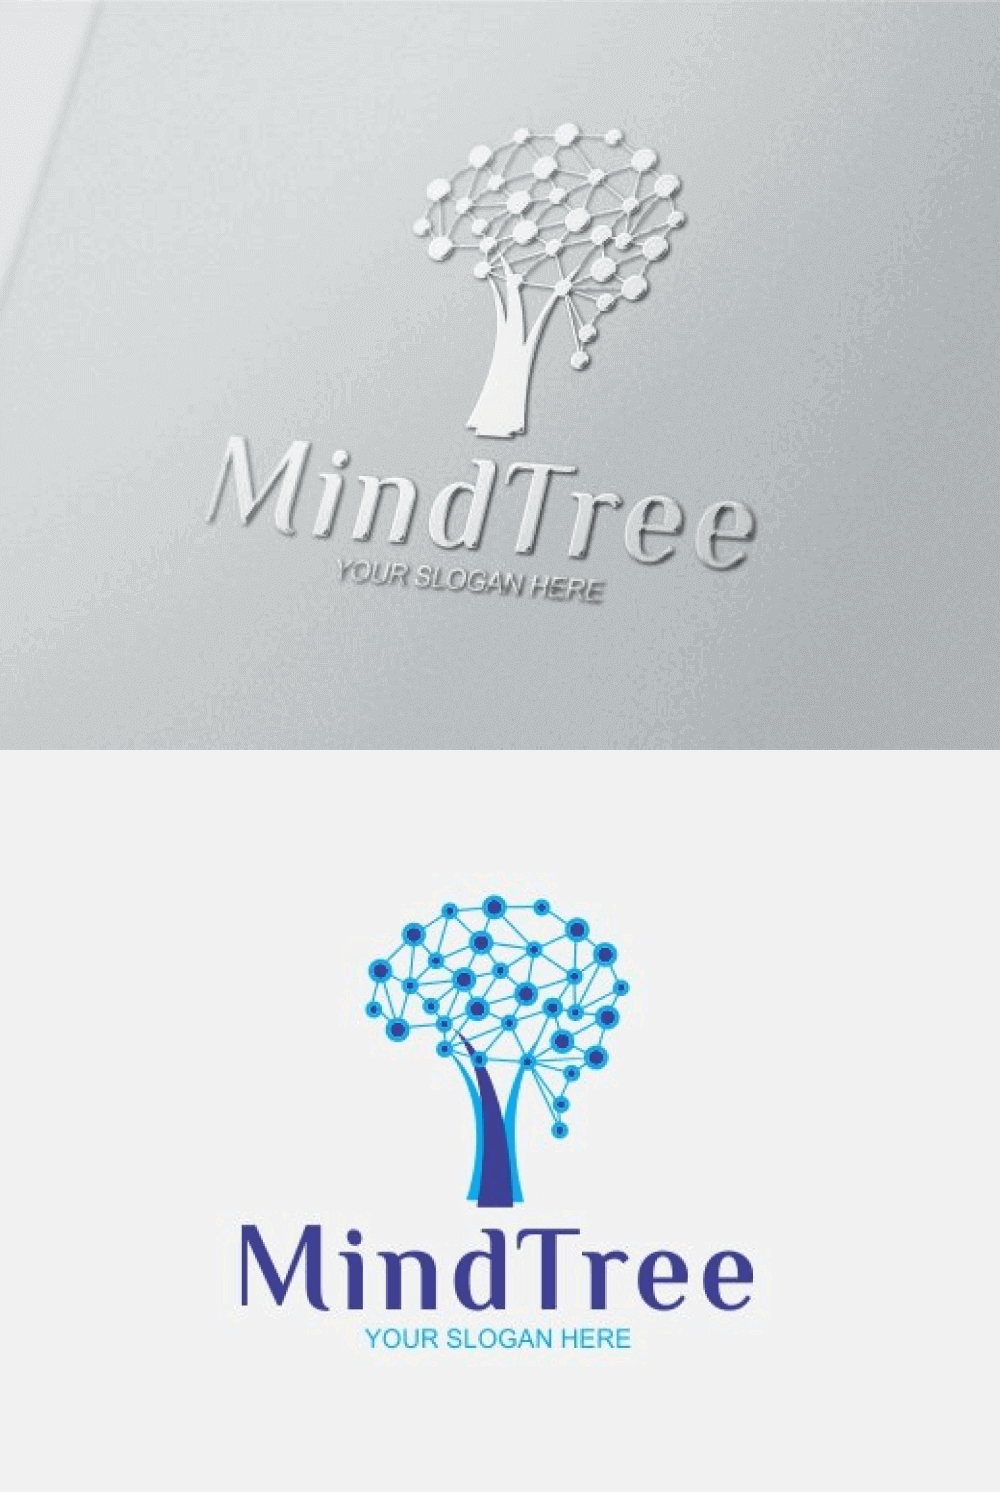 Mind Tree in Special Design.